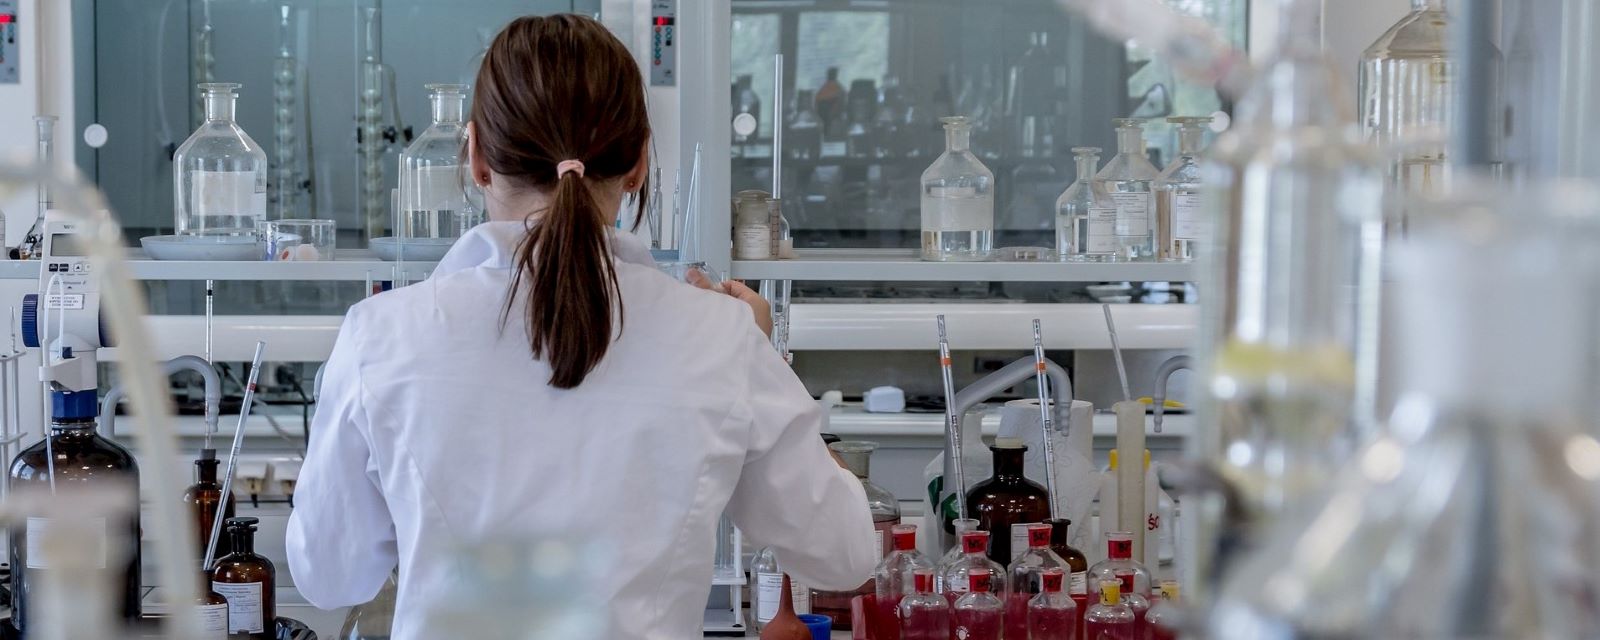 female scientist in a lab